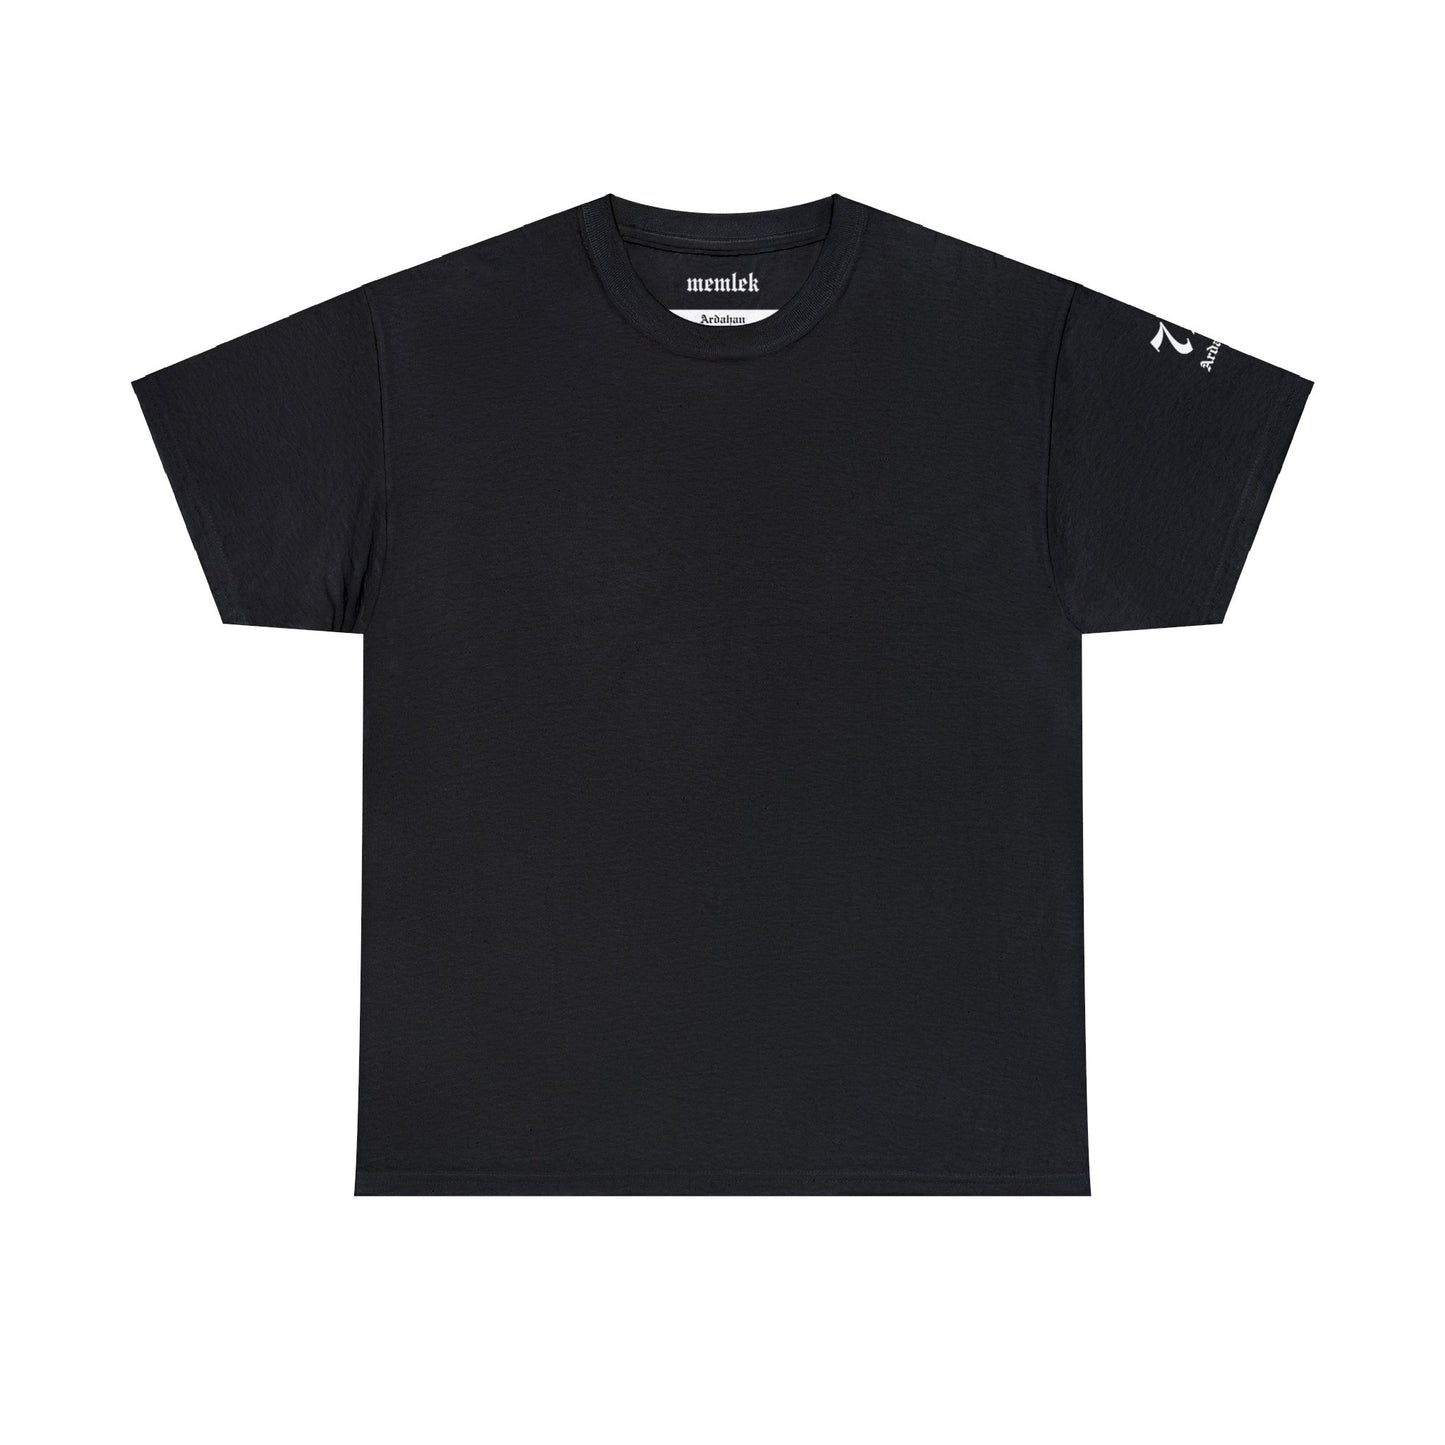 İlçem - 75 Ardahan - T-Shirt - Back Print - Black